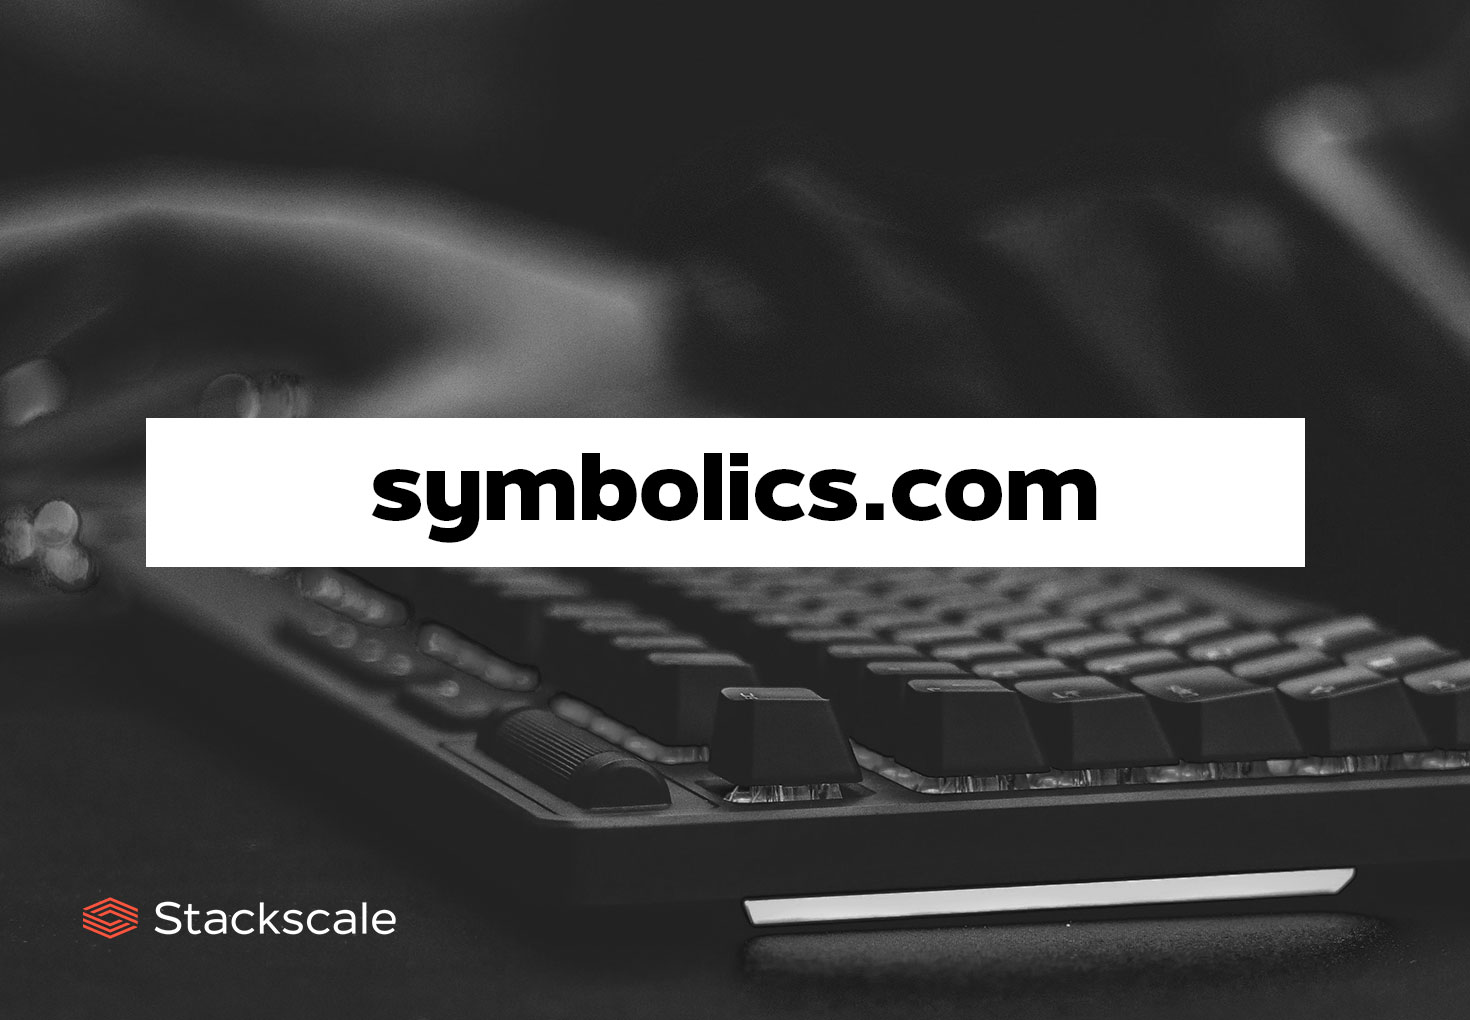 symbolics.com: el primer nombre de dominio .com registrado